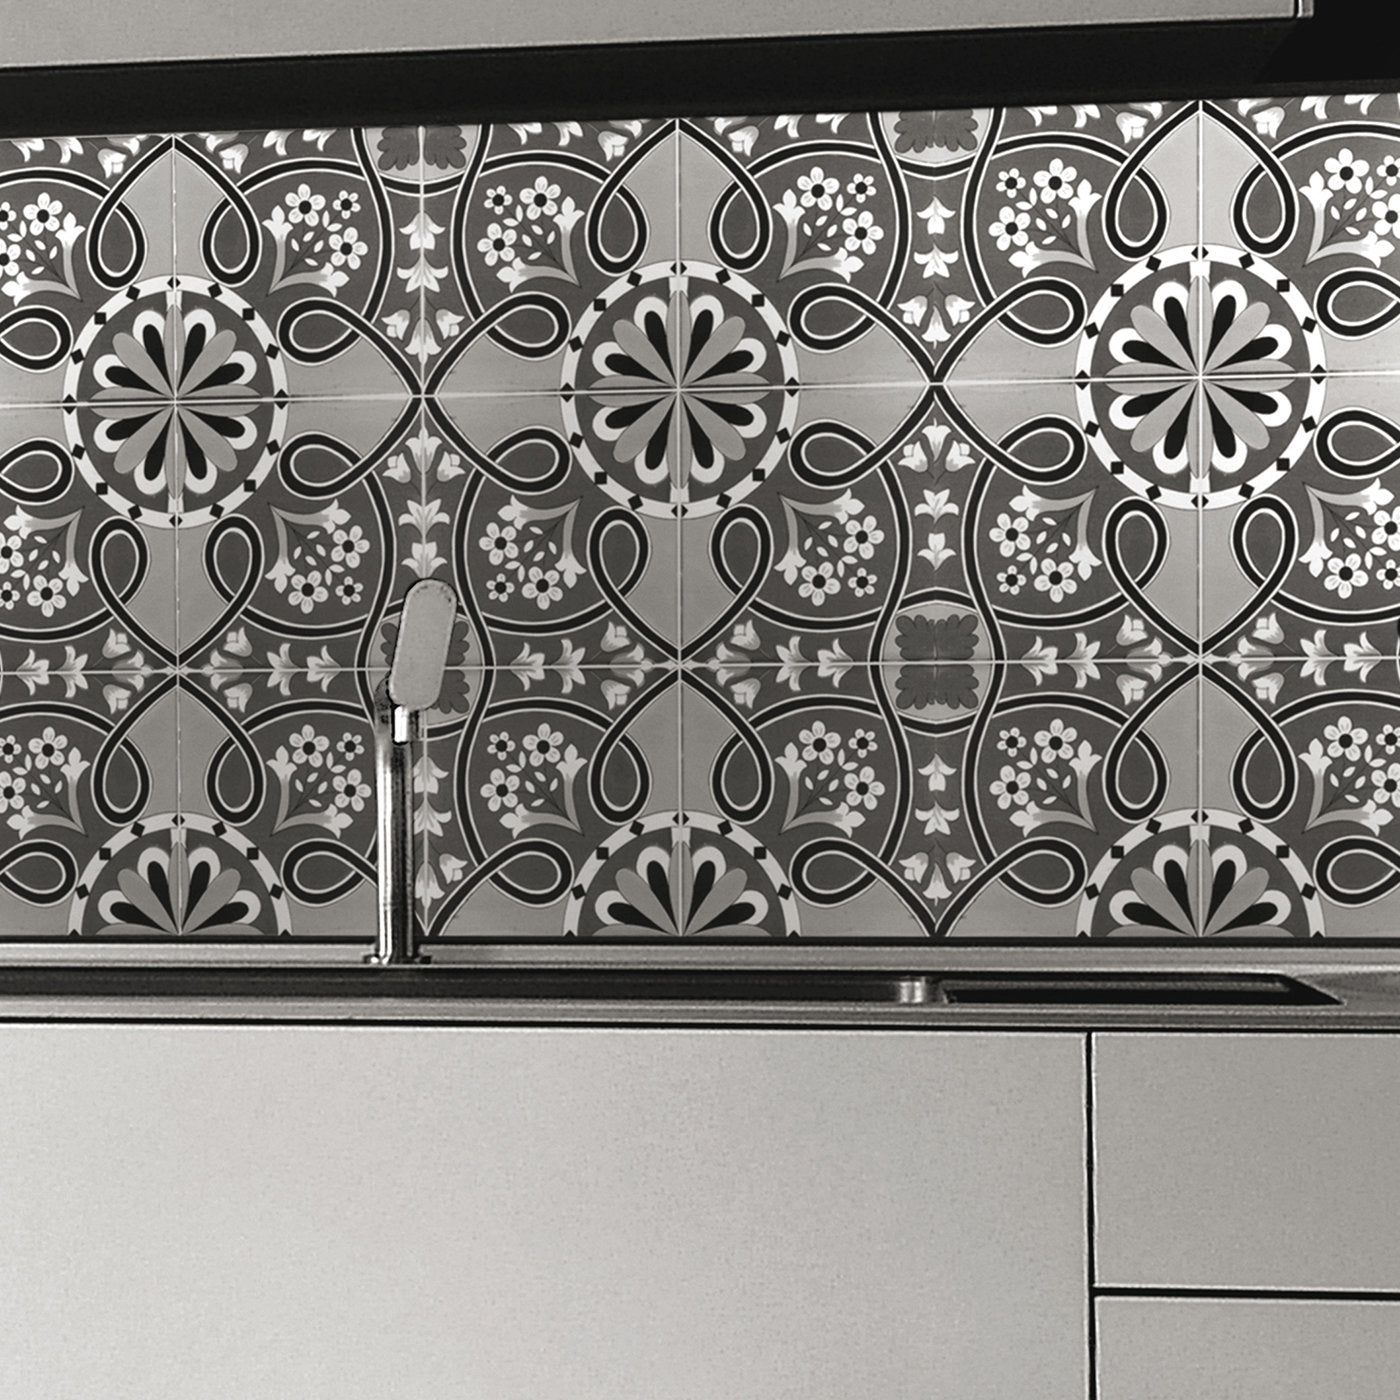 Set of 25 Nocelle Tiles Fiori Scuri Collection - Alternative view 2